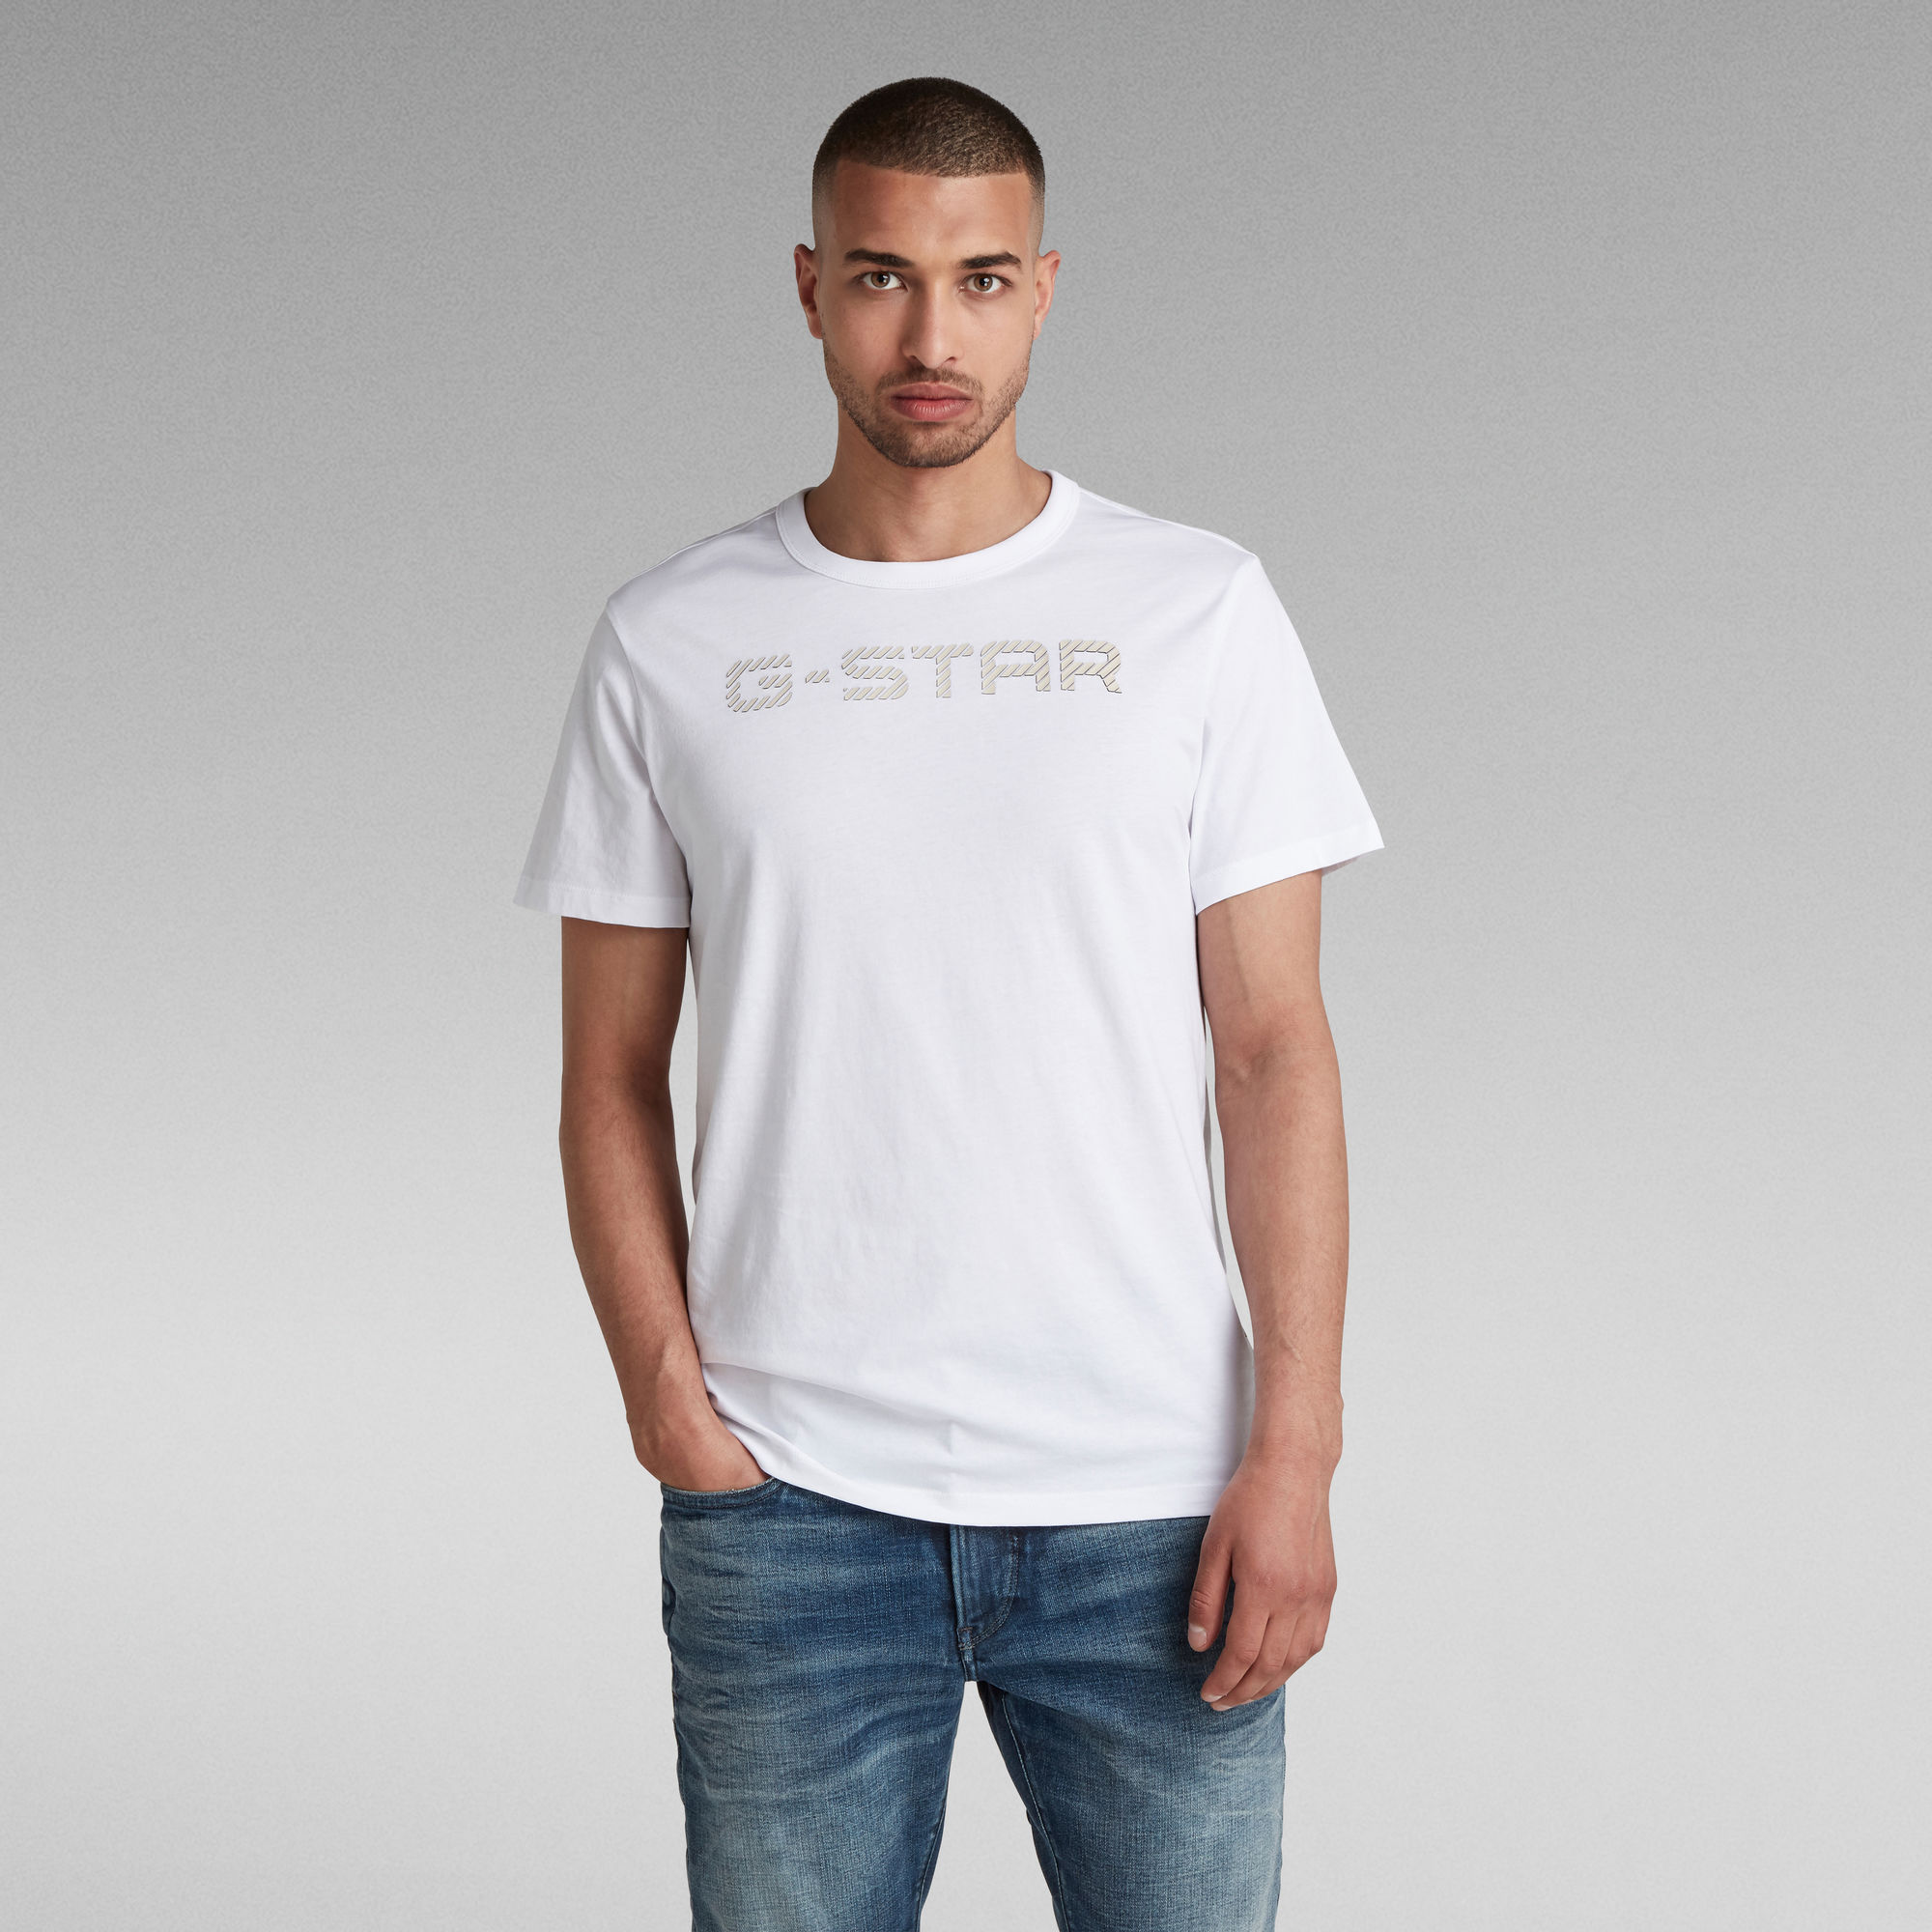 G Star T Shirt White G Star Raw® 4481